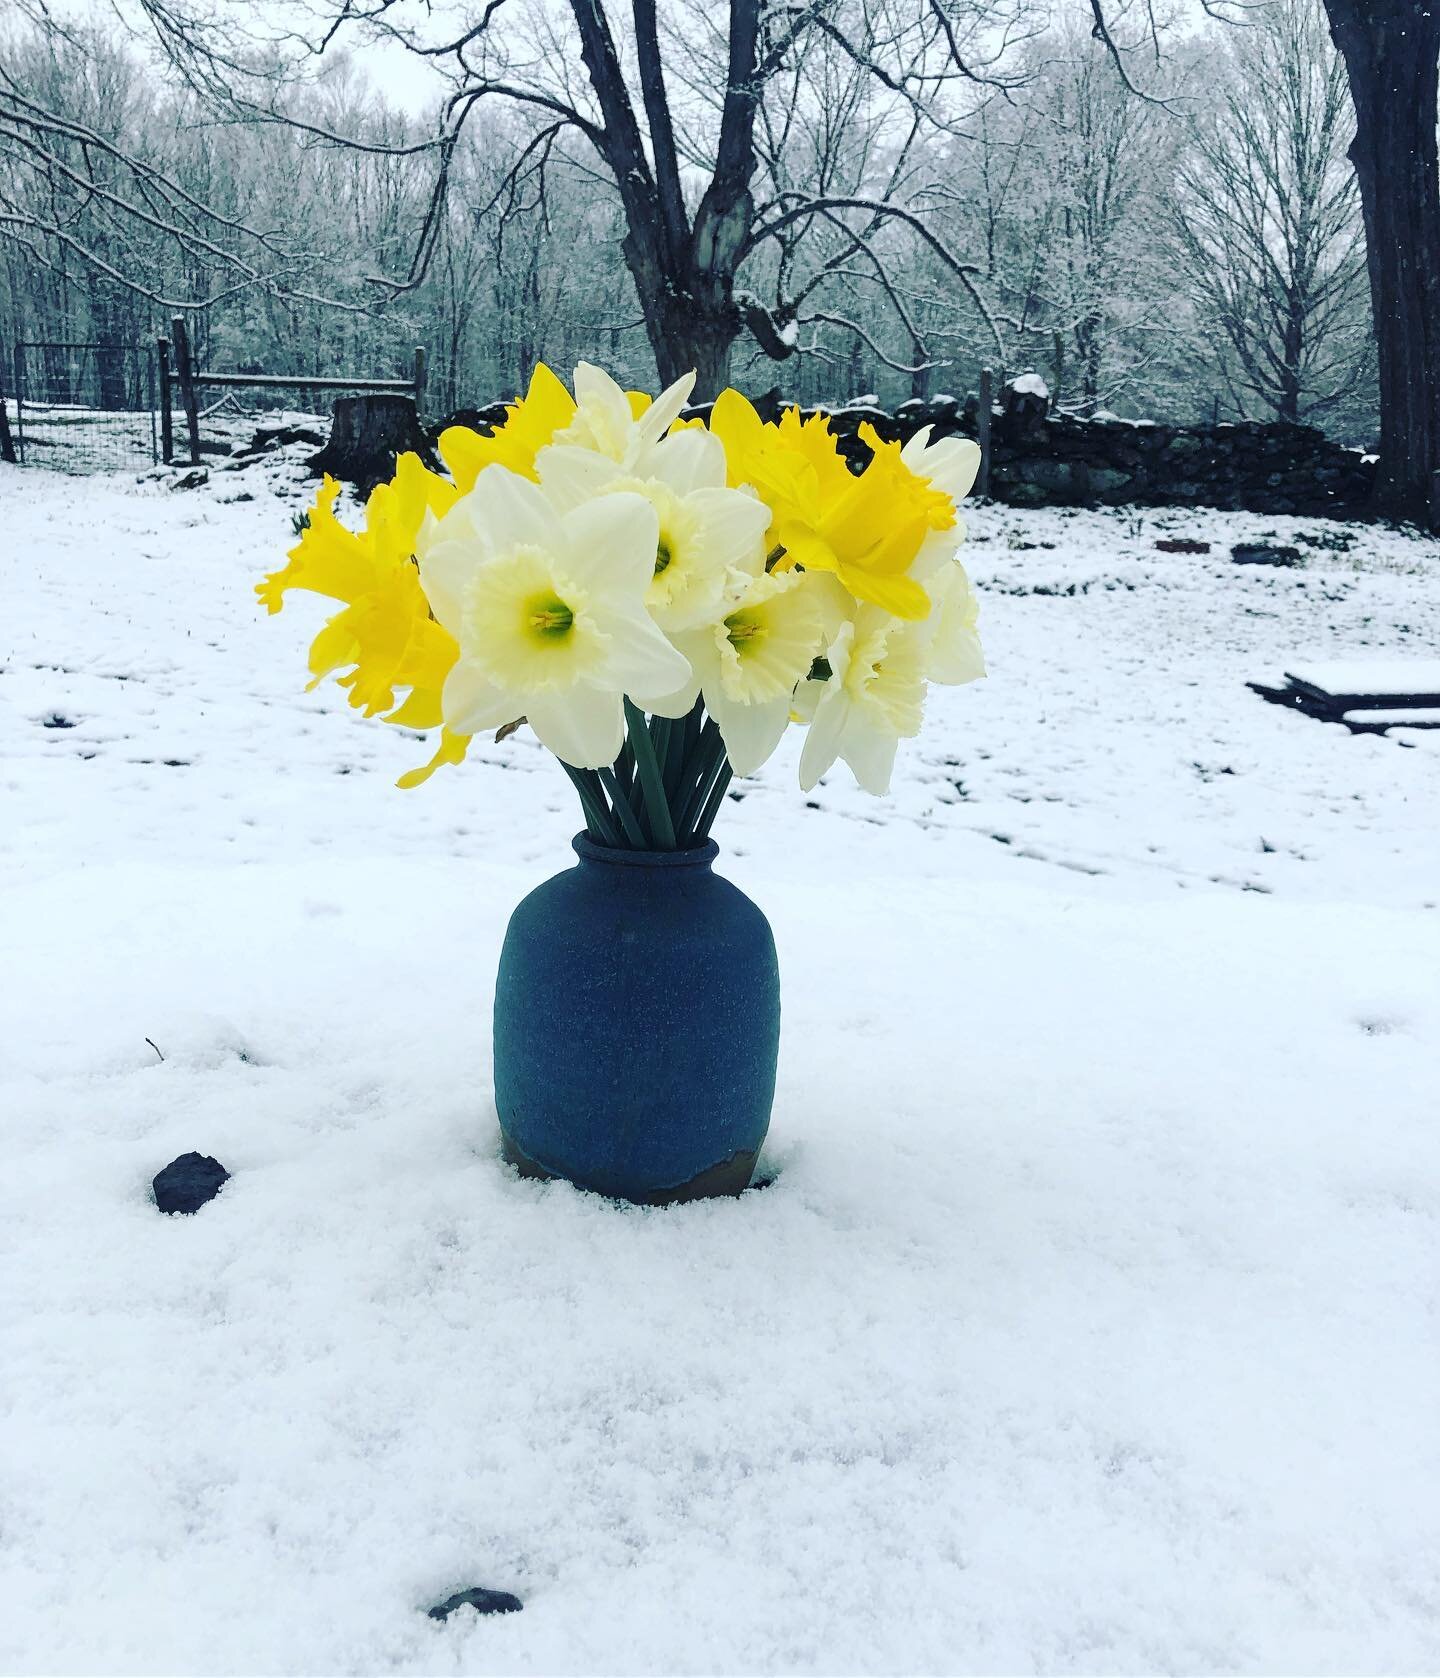 April Snows bring May Flowers @ Sun Hill Farm!